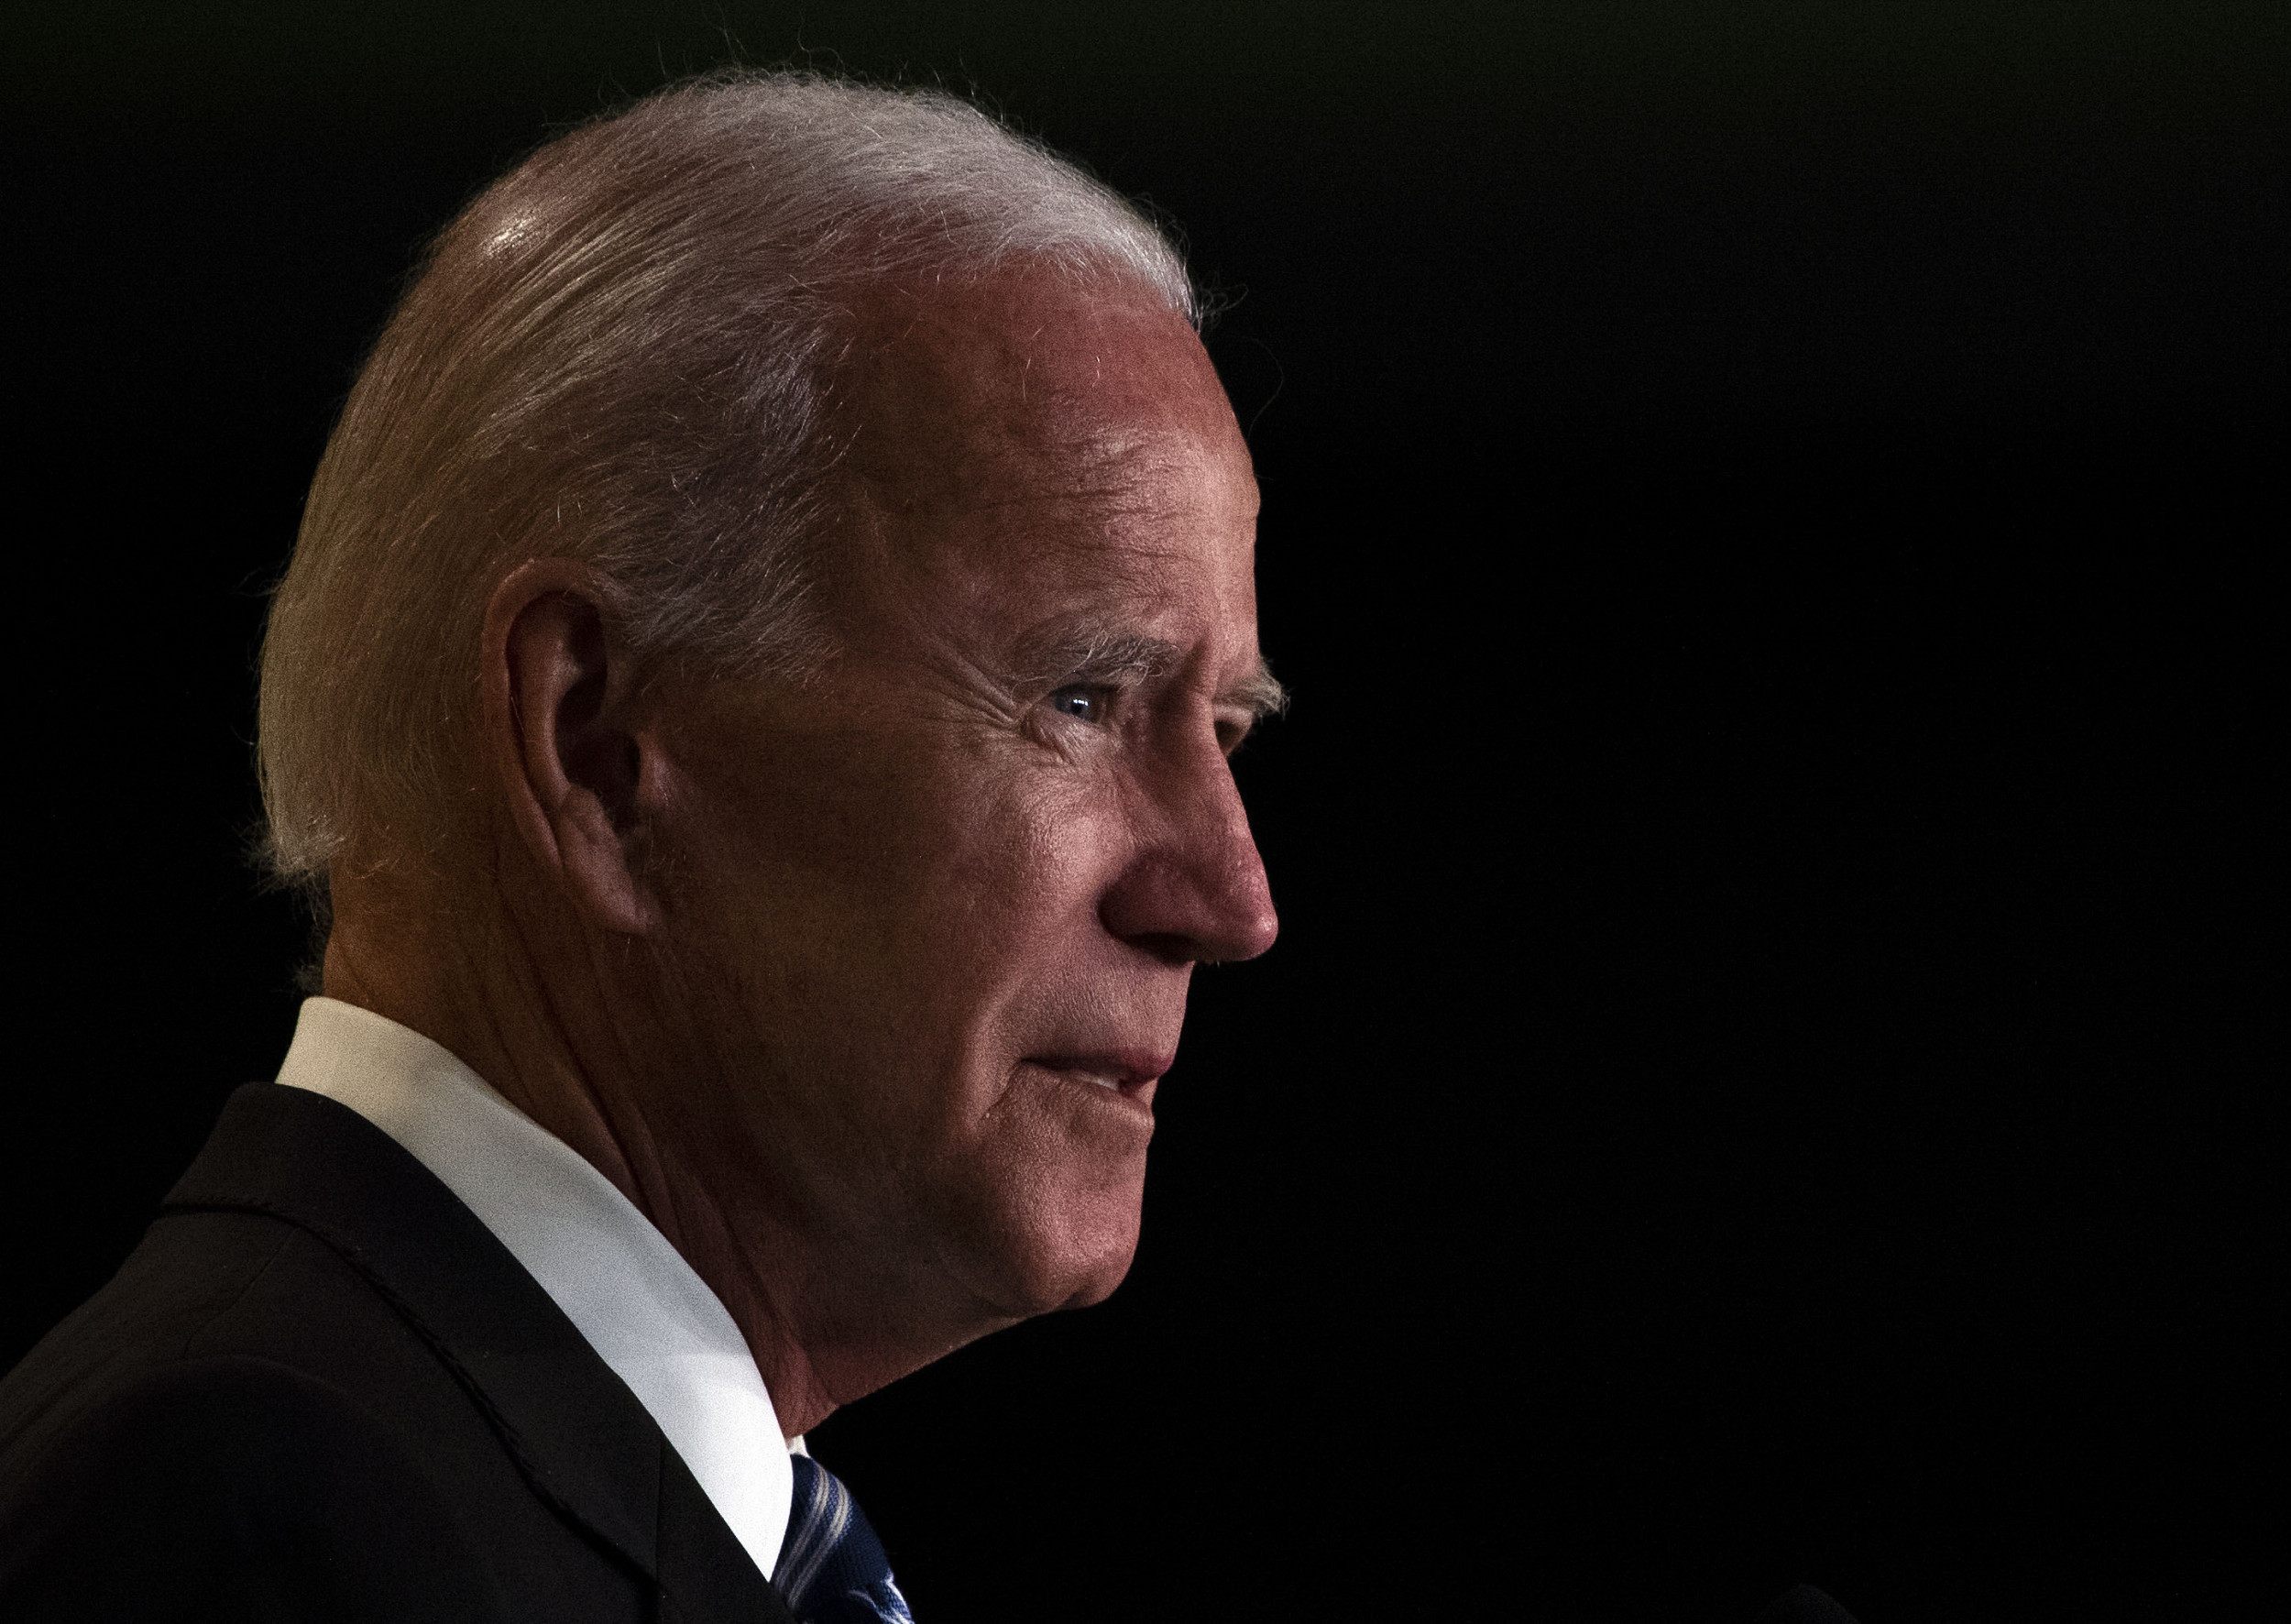 Philly DA Slams Biden, Moderates at Democratic Event: 'Joe Biden Knows